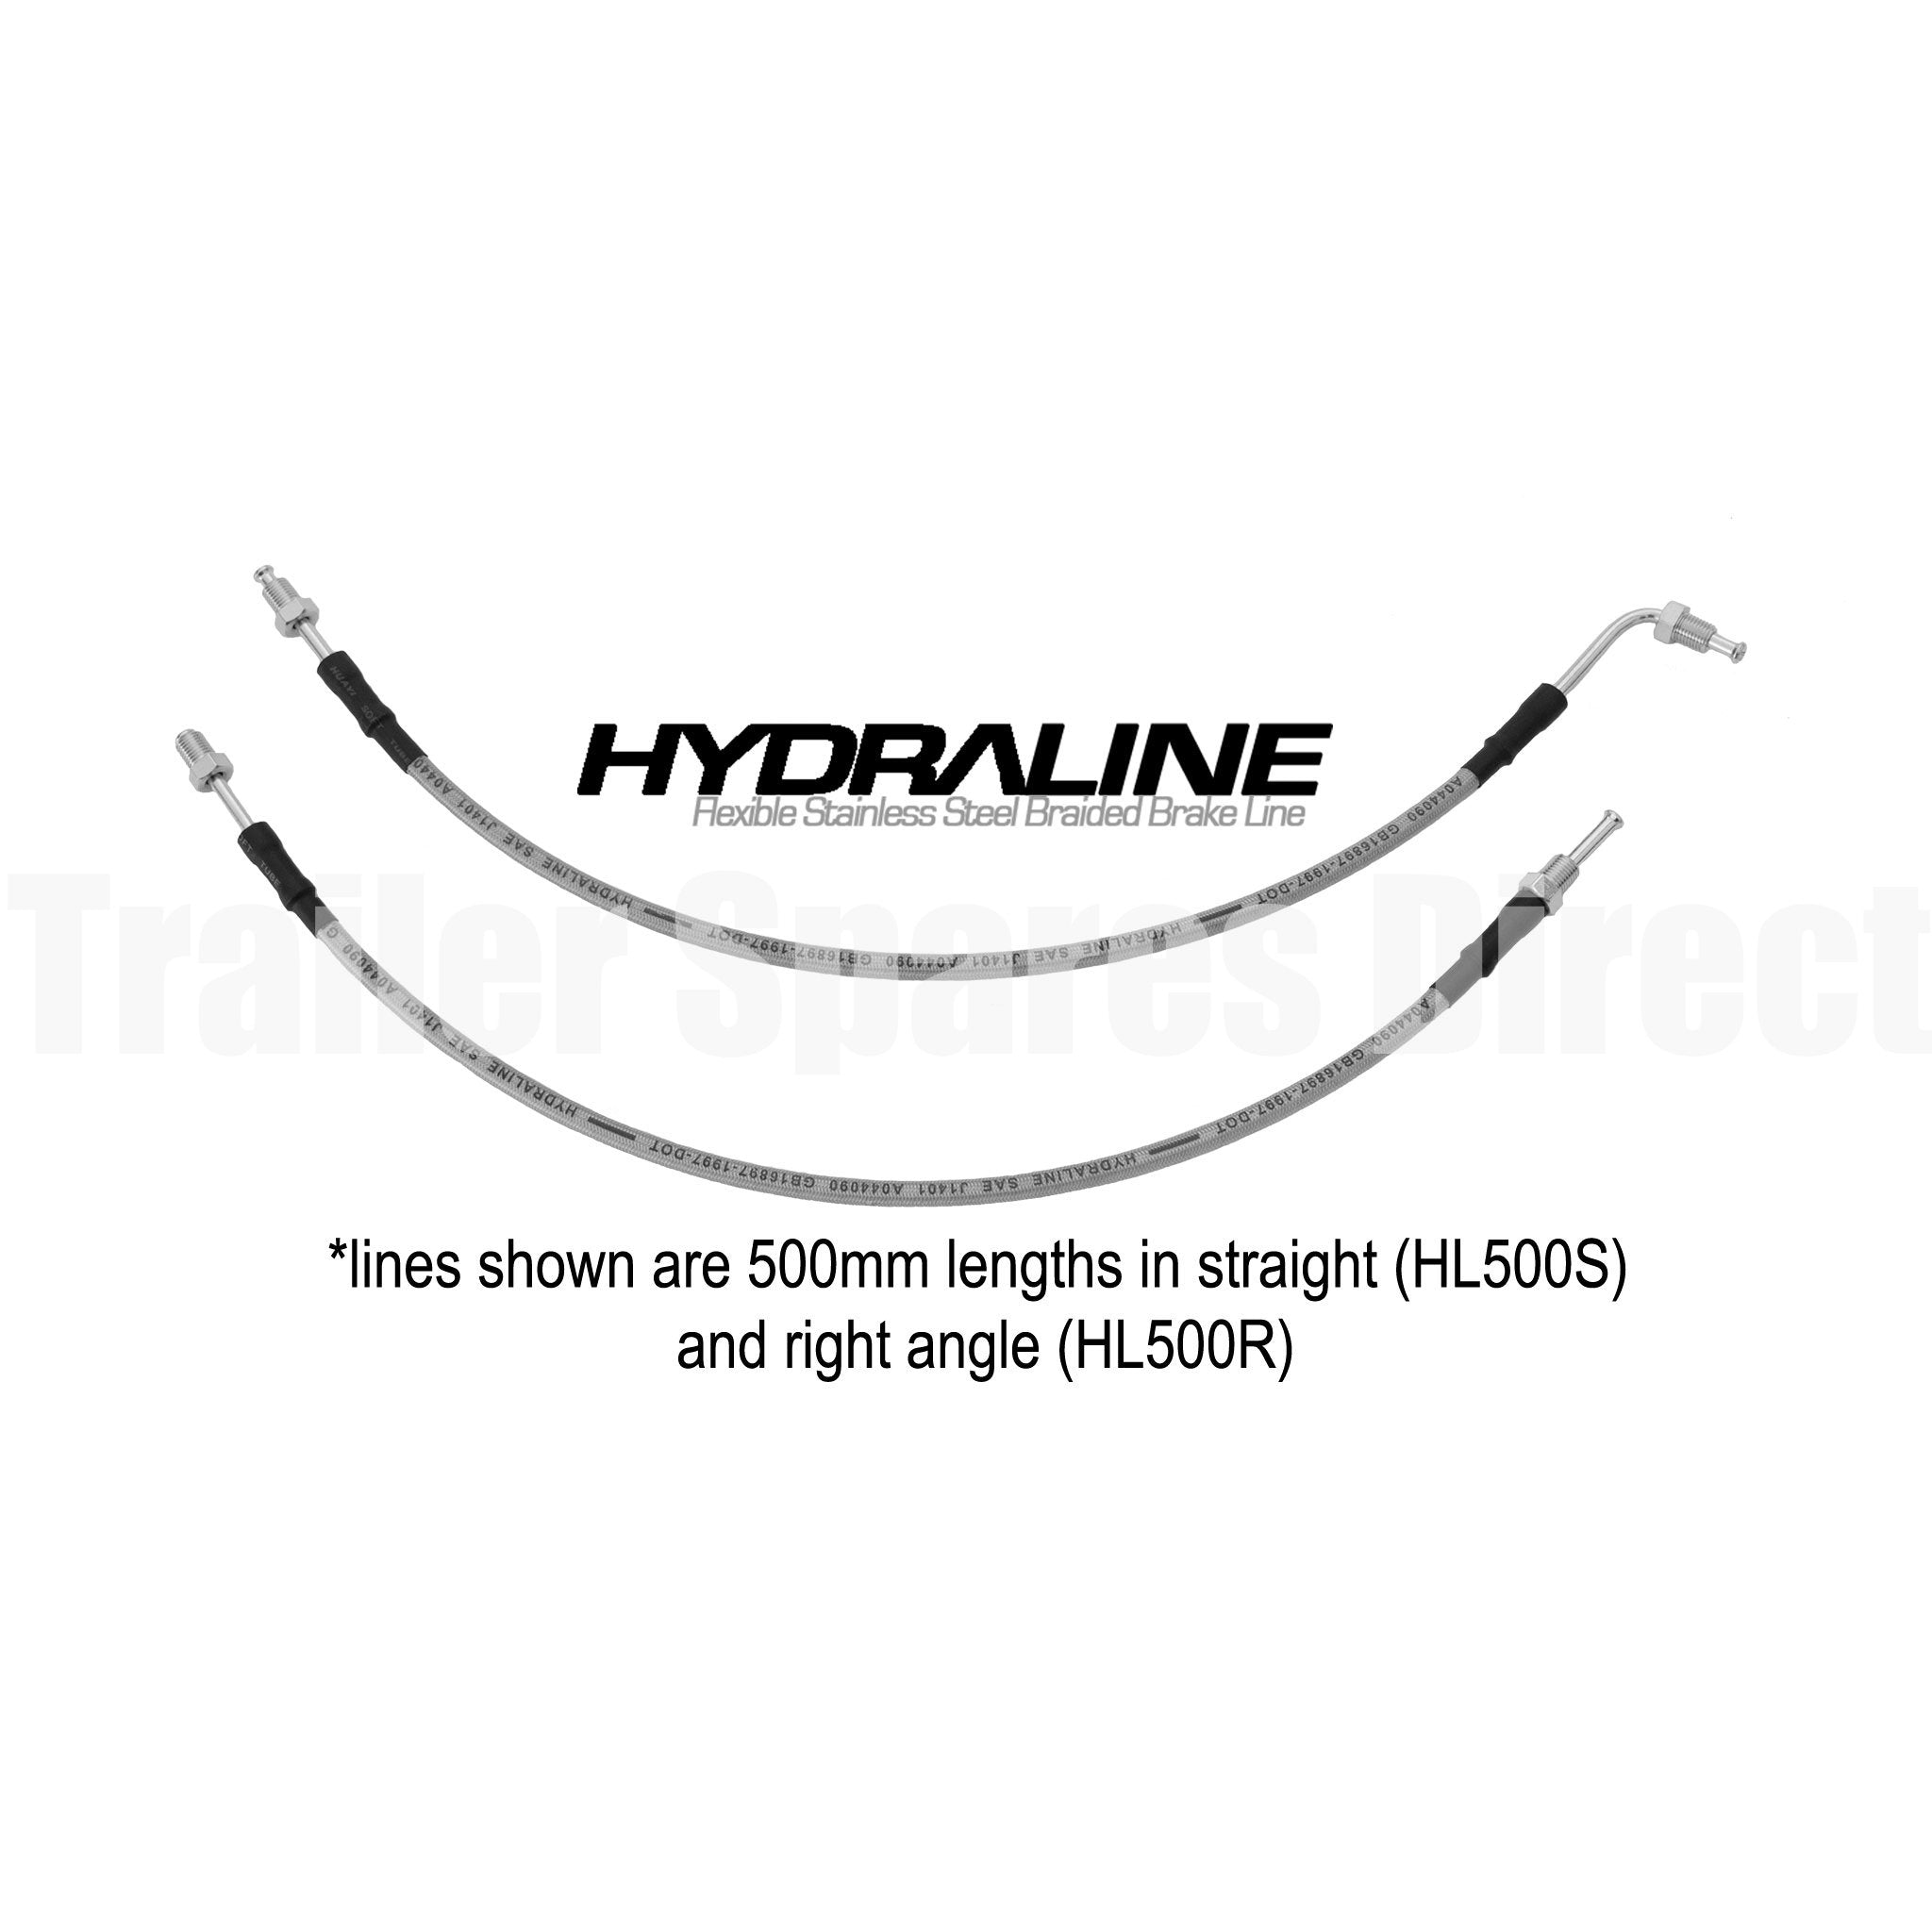 2000mm HydraLine brake hose - 90 degree end fitting